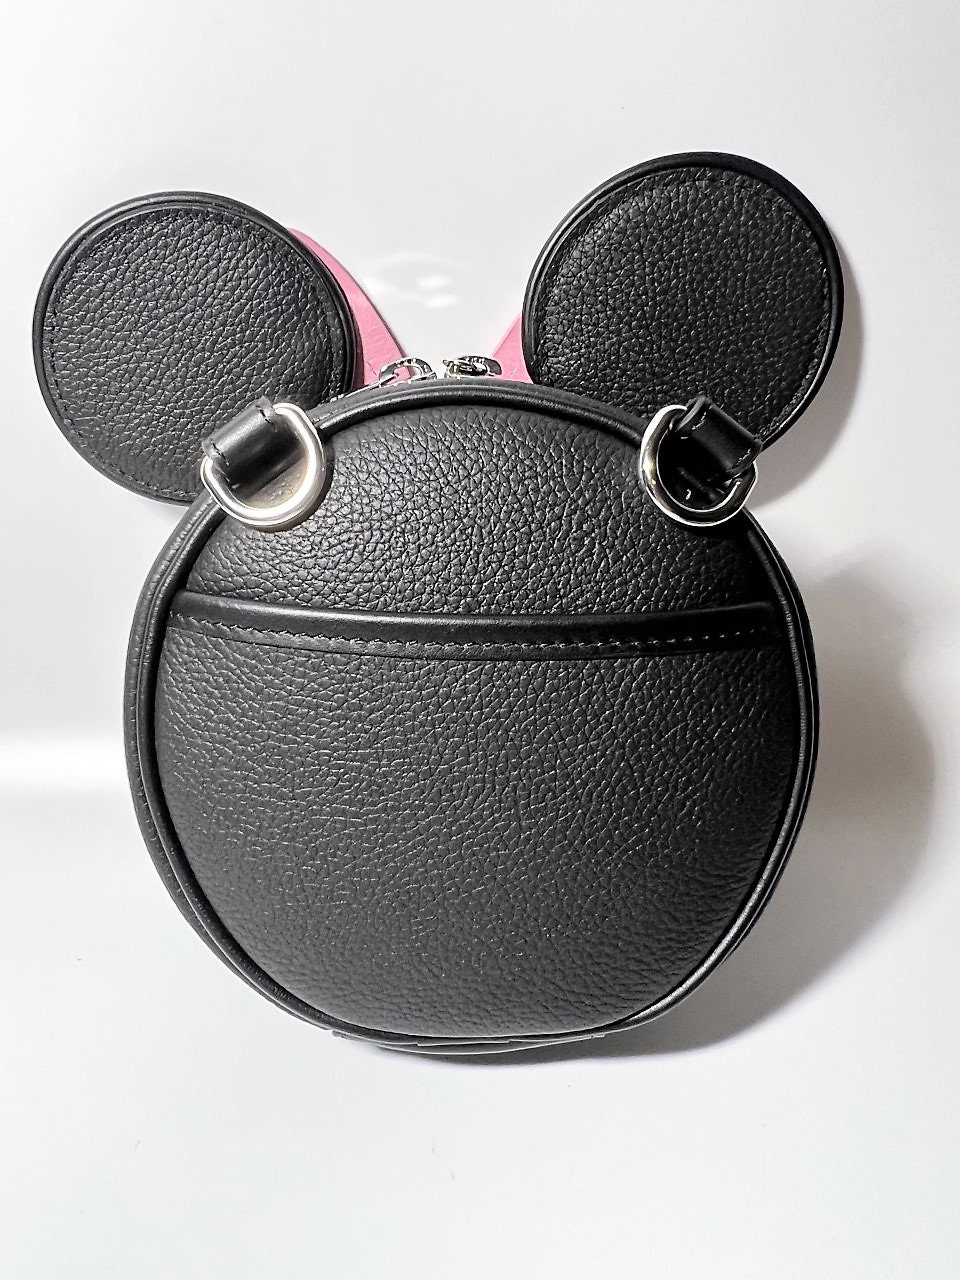 Louis Vuitton Authentic Louis Vuitton Sheron Barber Mickey Mouse